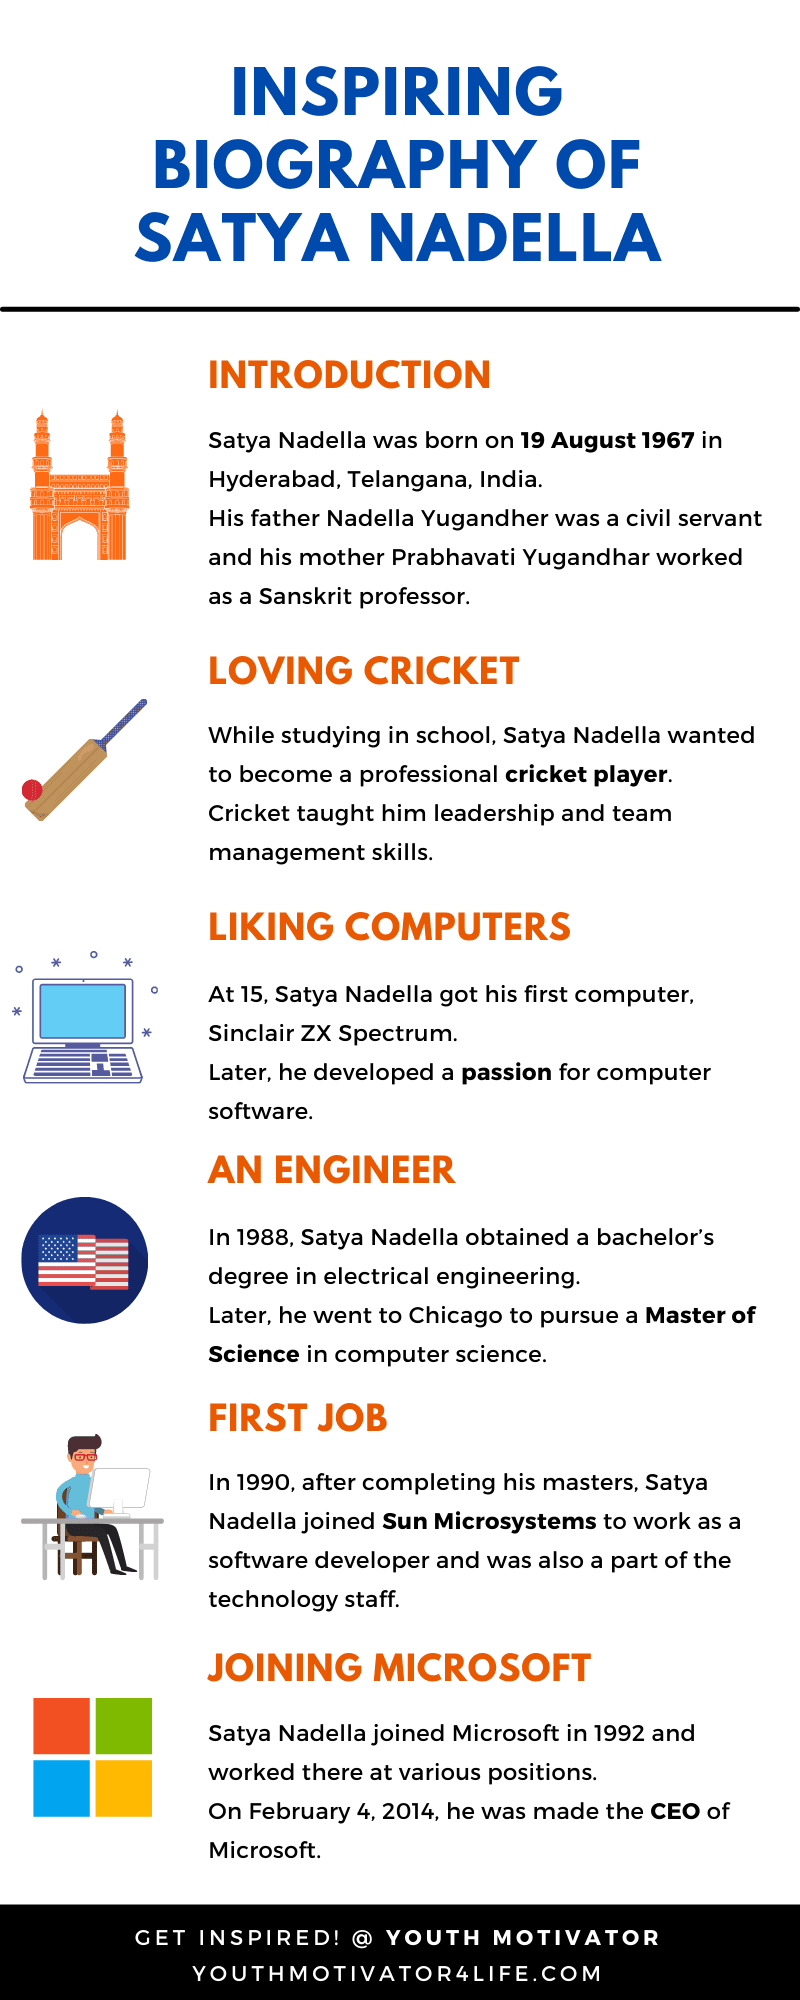 An infographic on biography of Satya Nadella